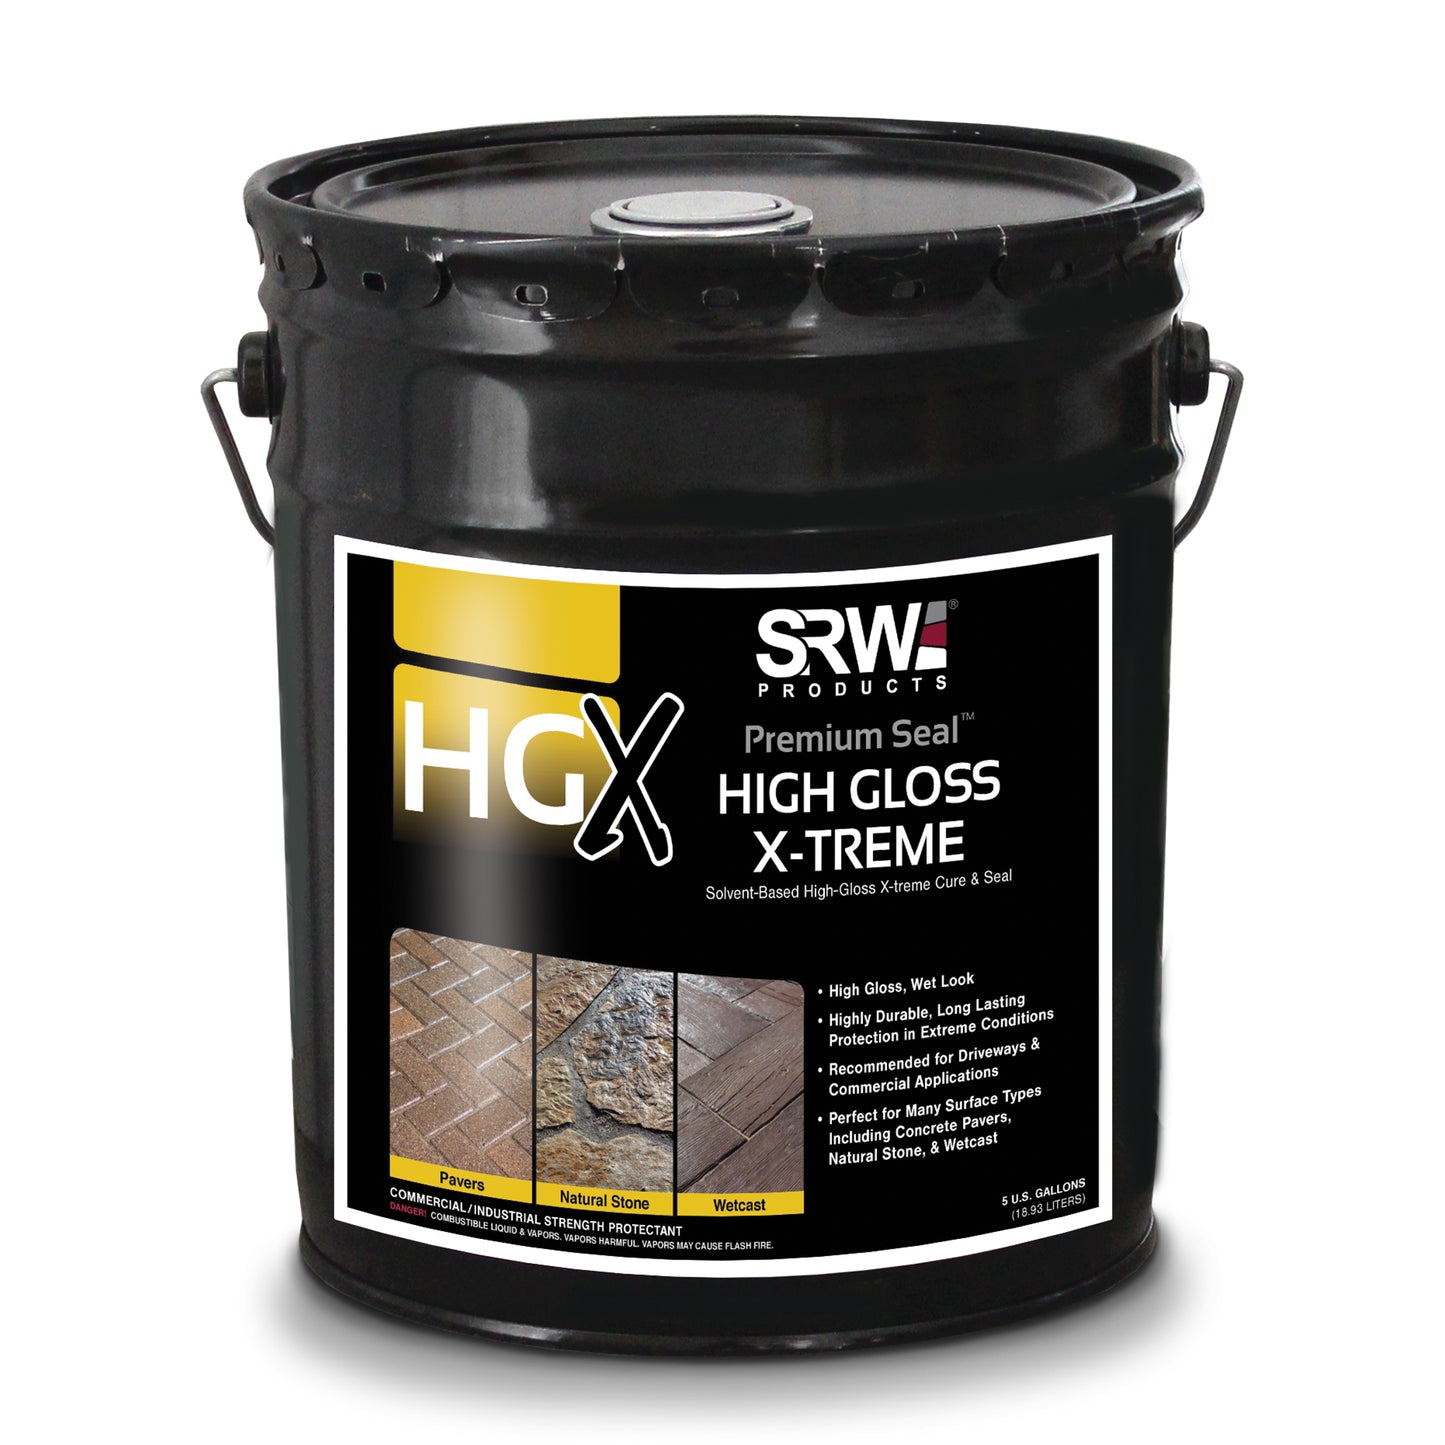 SRW Products HGX High Gloss X-Treme - Premium Seal™ bucket